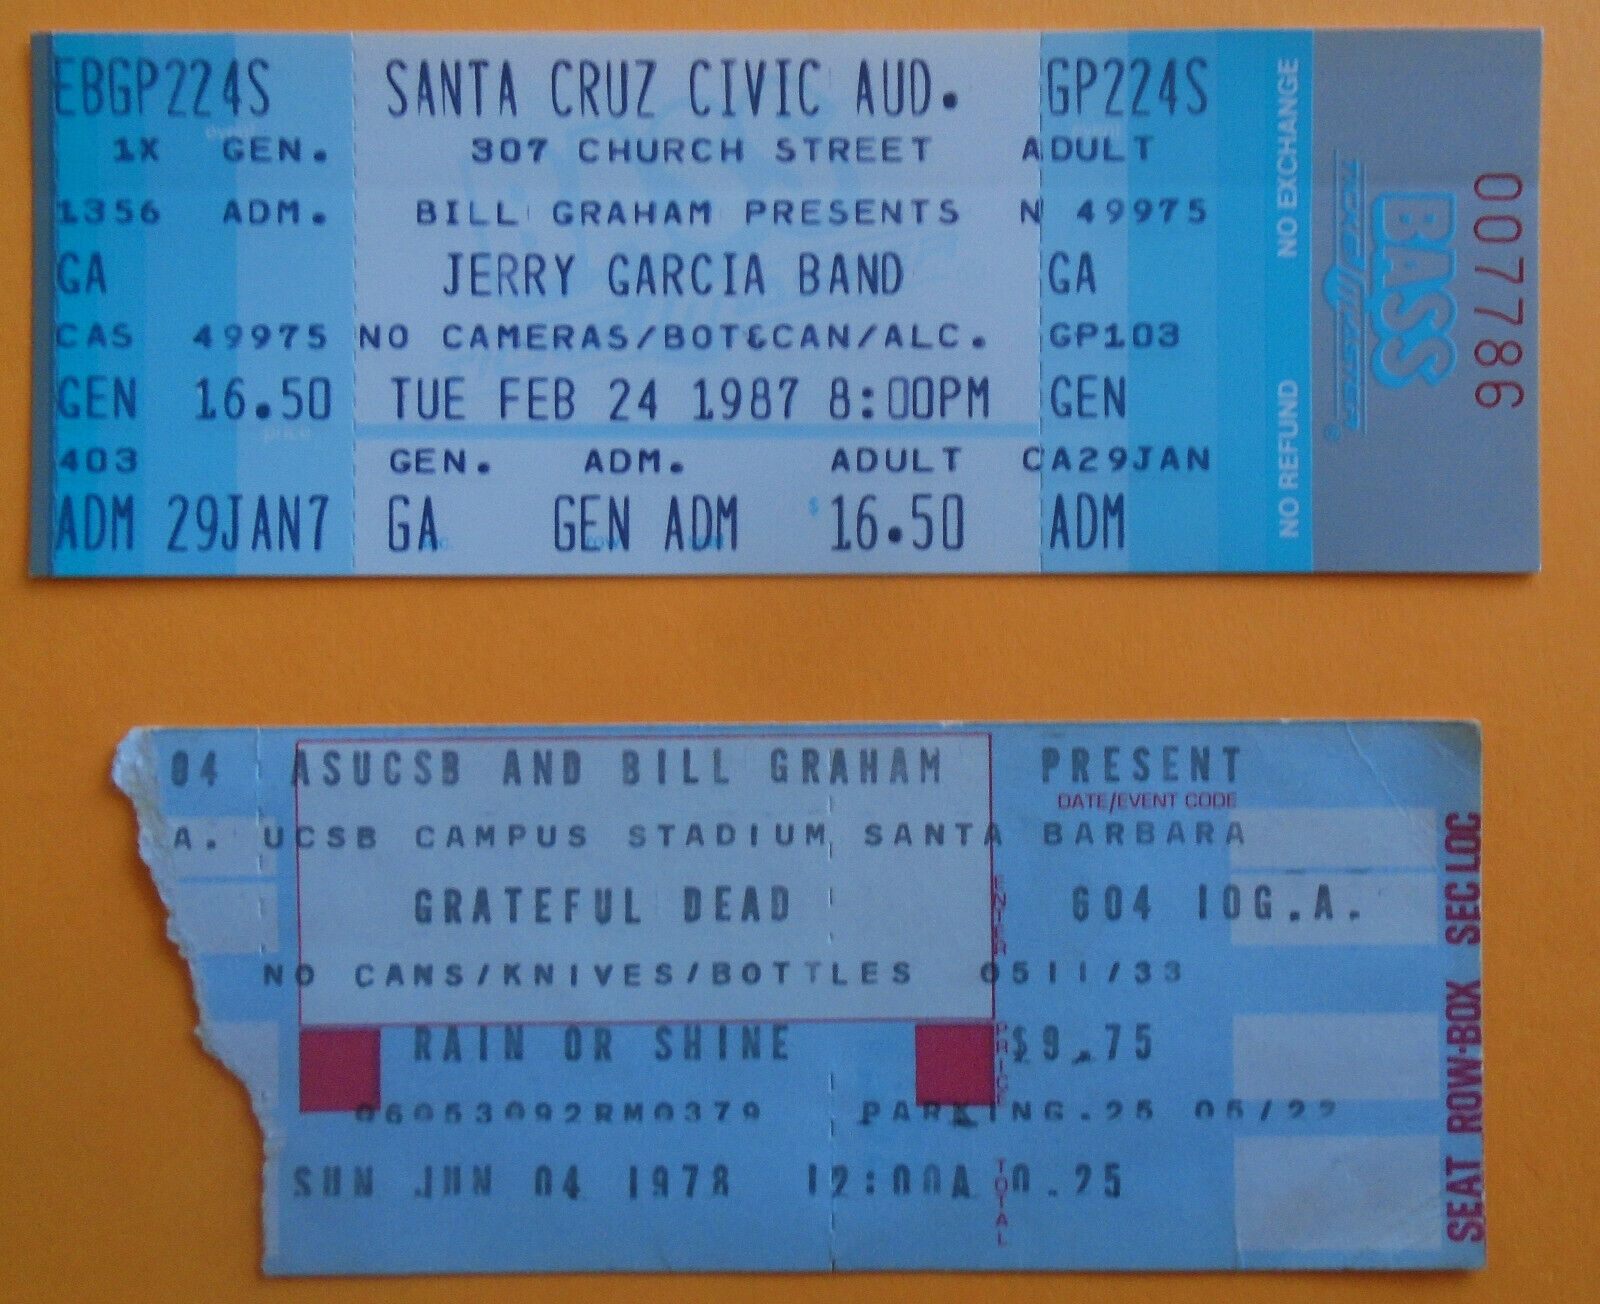 Grateful Dead-ucsb-6/4/78_jerry Garcia Band-santa Cruz Civic-2-24-87-nice Ticket